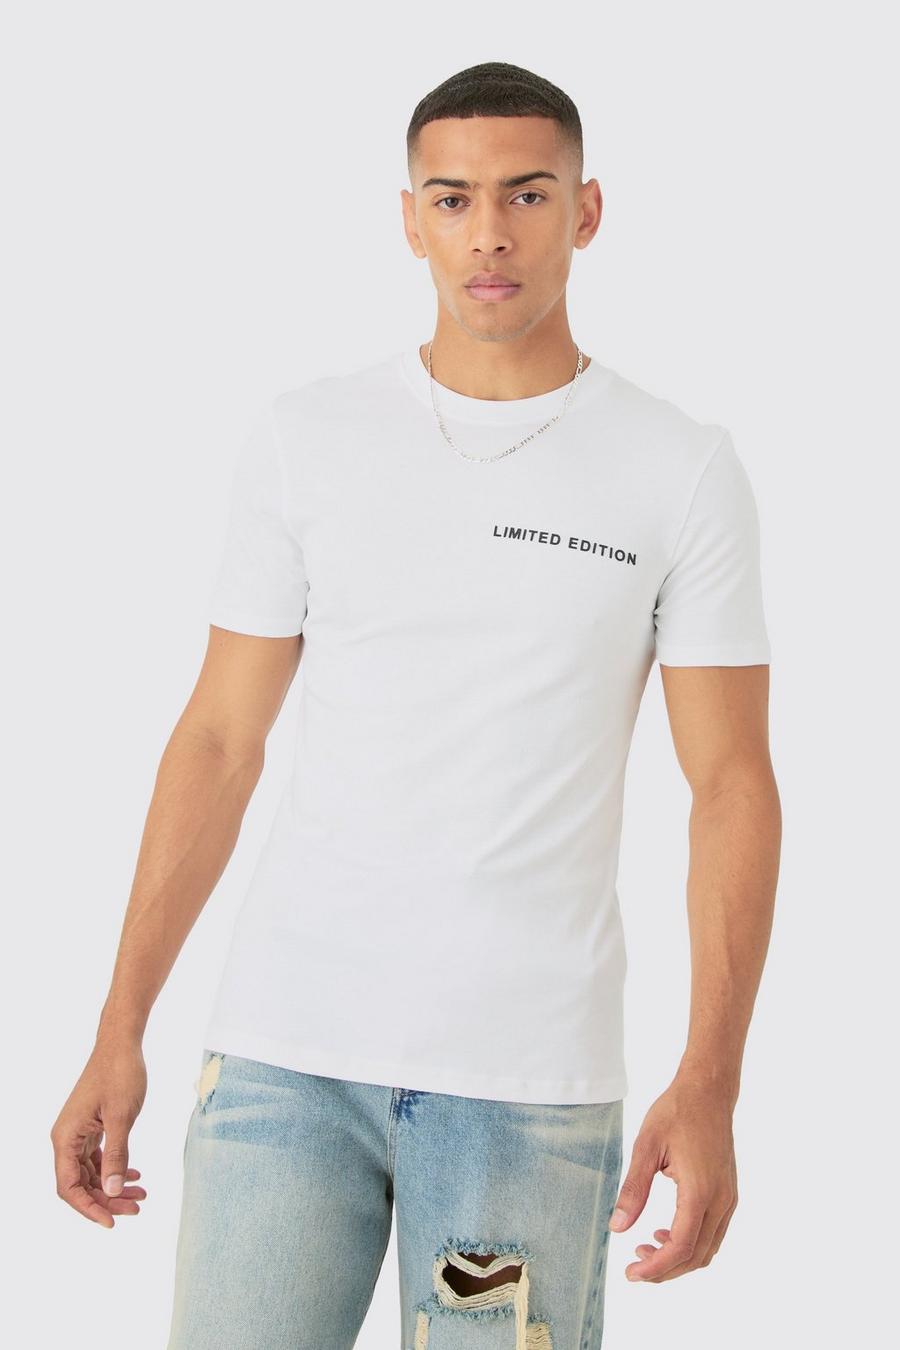 T-shirt moulant premium - Limited Edition, White